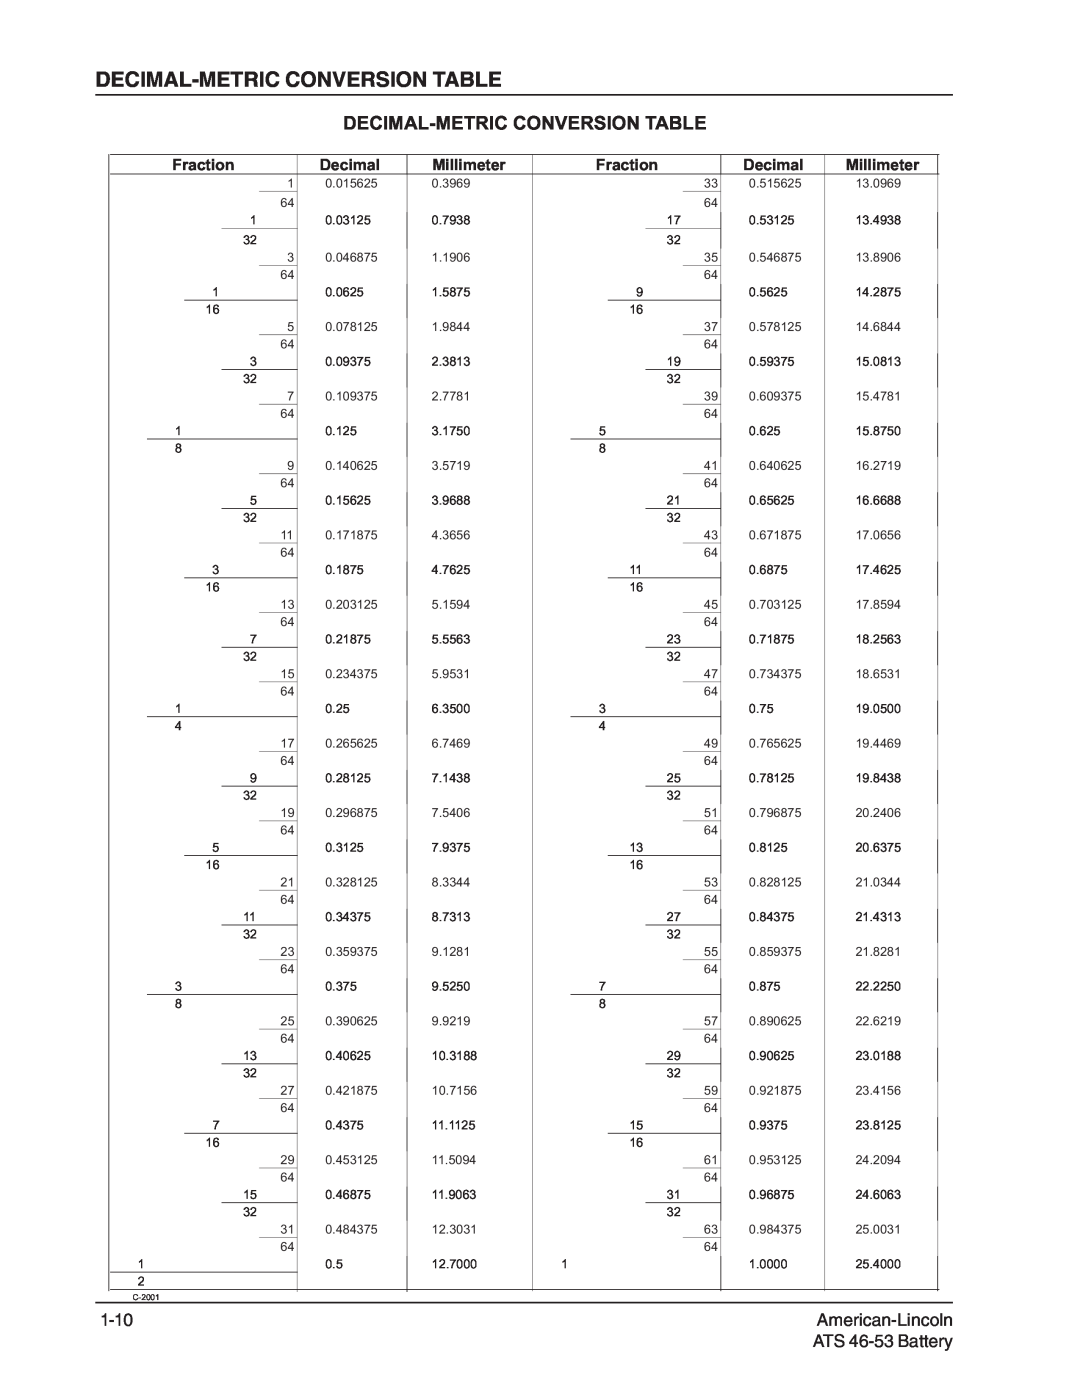 Nilfisk-ALTO 46/53 manual Decimal-Metricconversion Table, Fraction, Millimeter 